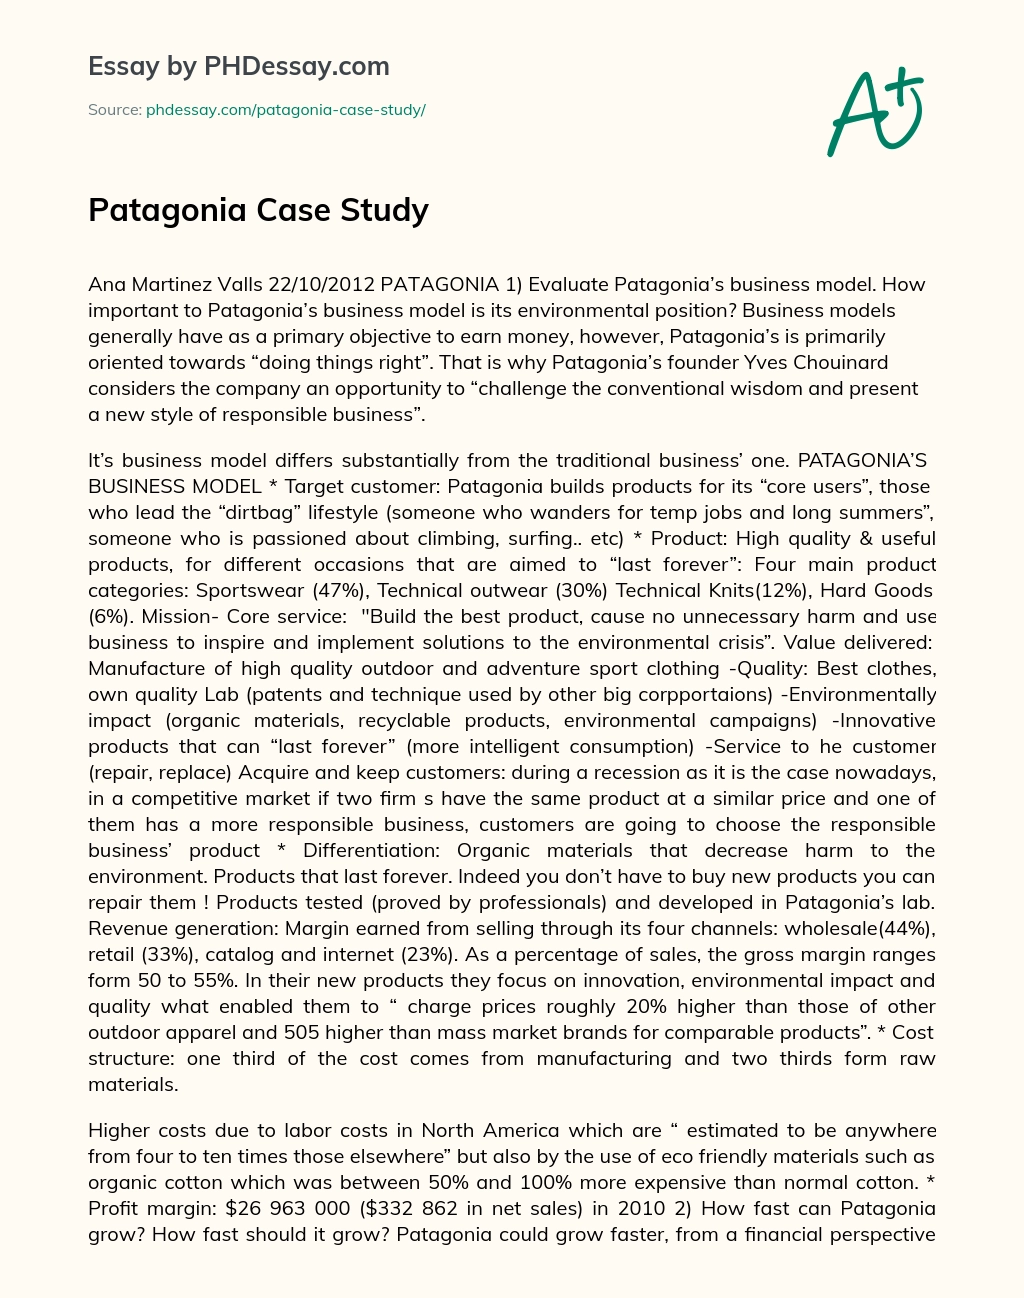 Patagonia Case Study essay